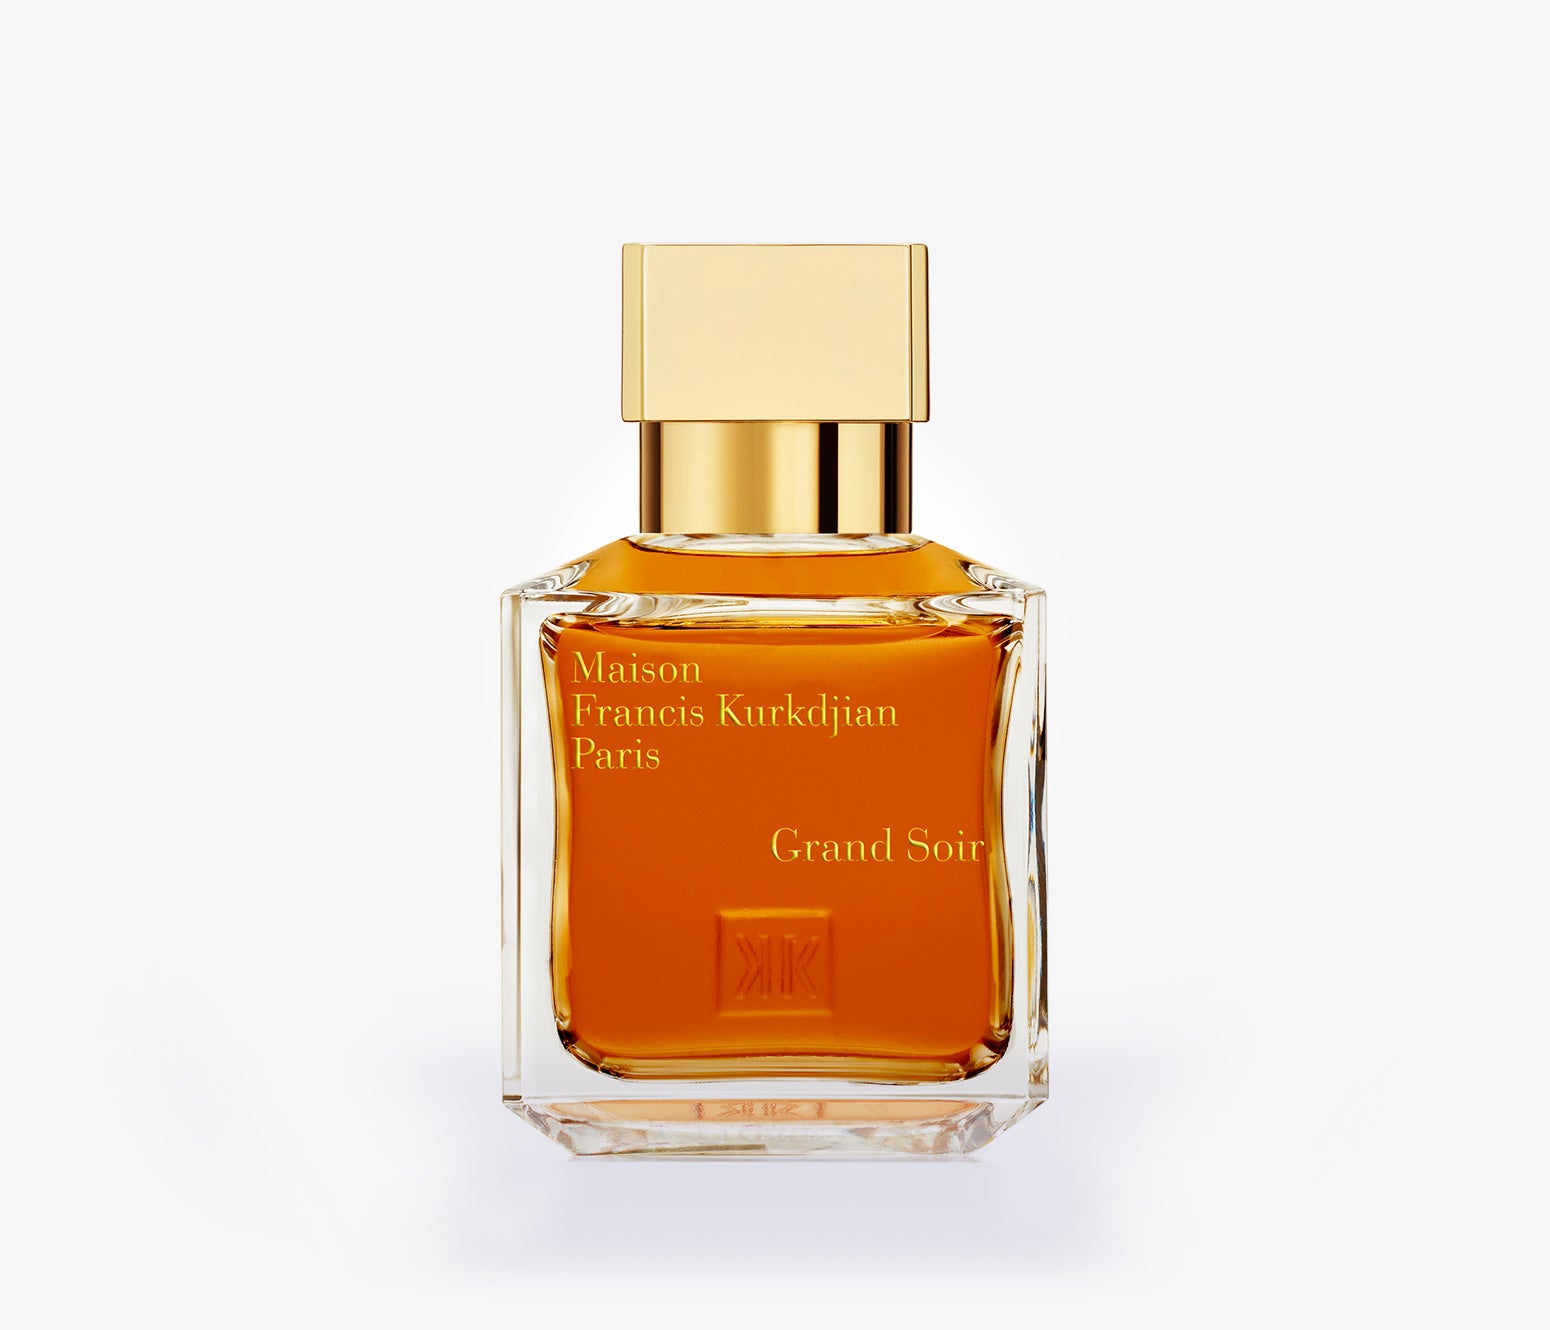 Maison Francis Kurkdjian - Grand Soir - 70ml - MZF001 - Product Image - Fragrance - Les Senteurs